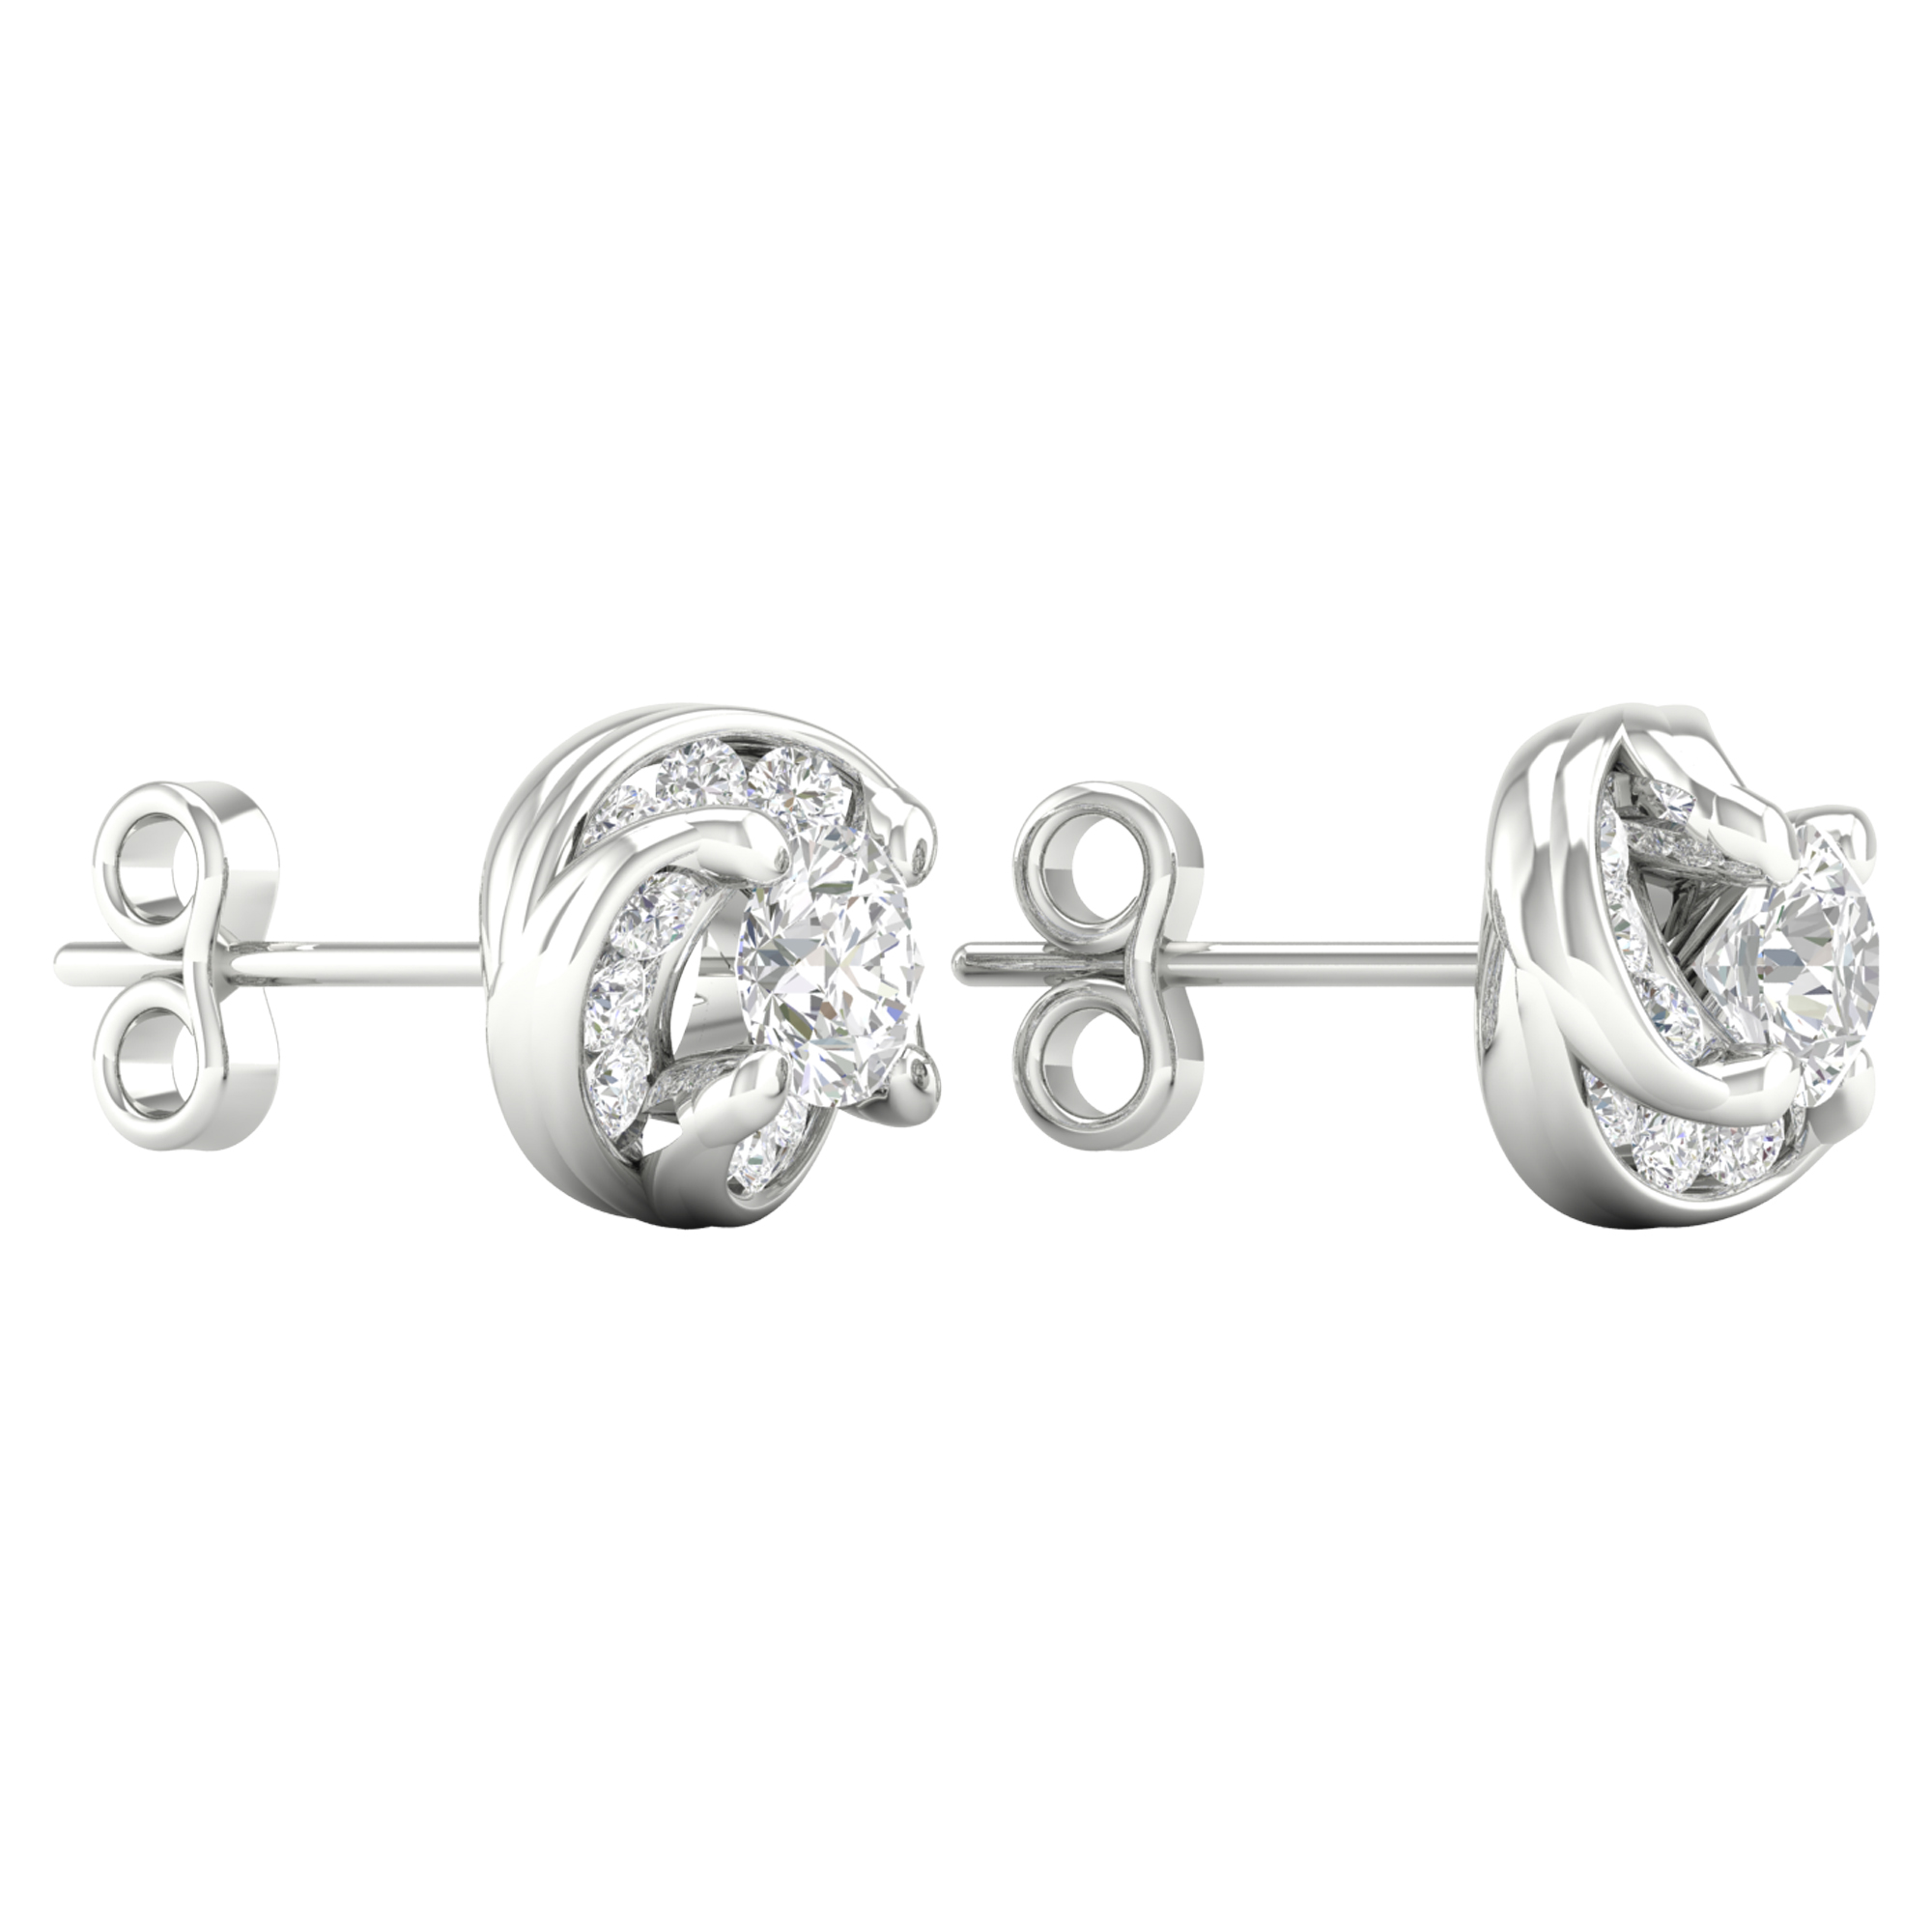 Amouria 10k White Gold 1 Ct TDW Diamond Stud Earrings (H-I, I2)